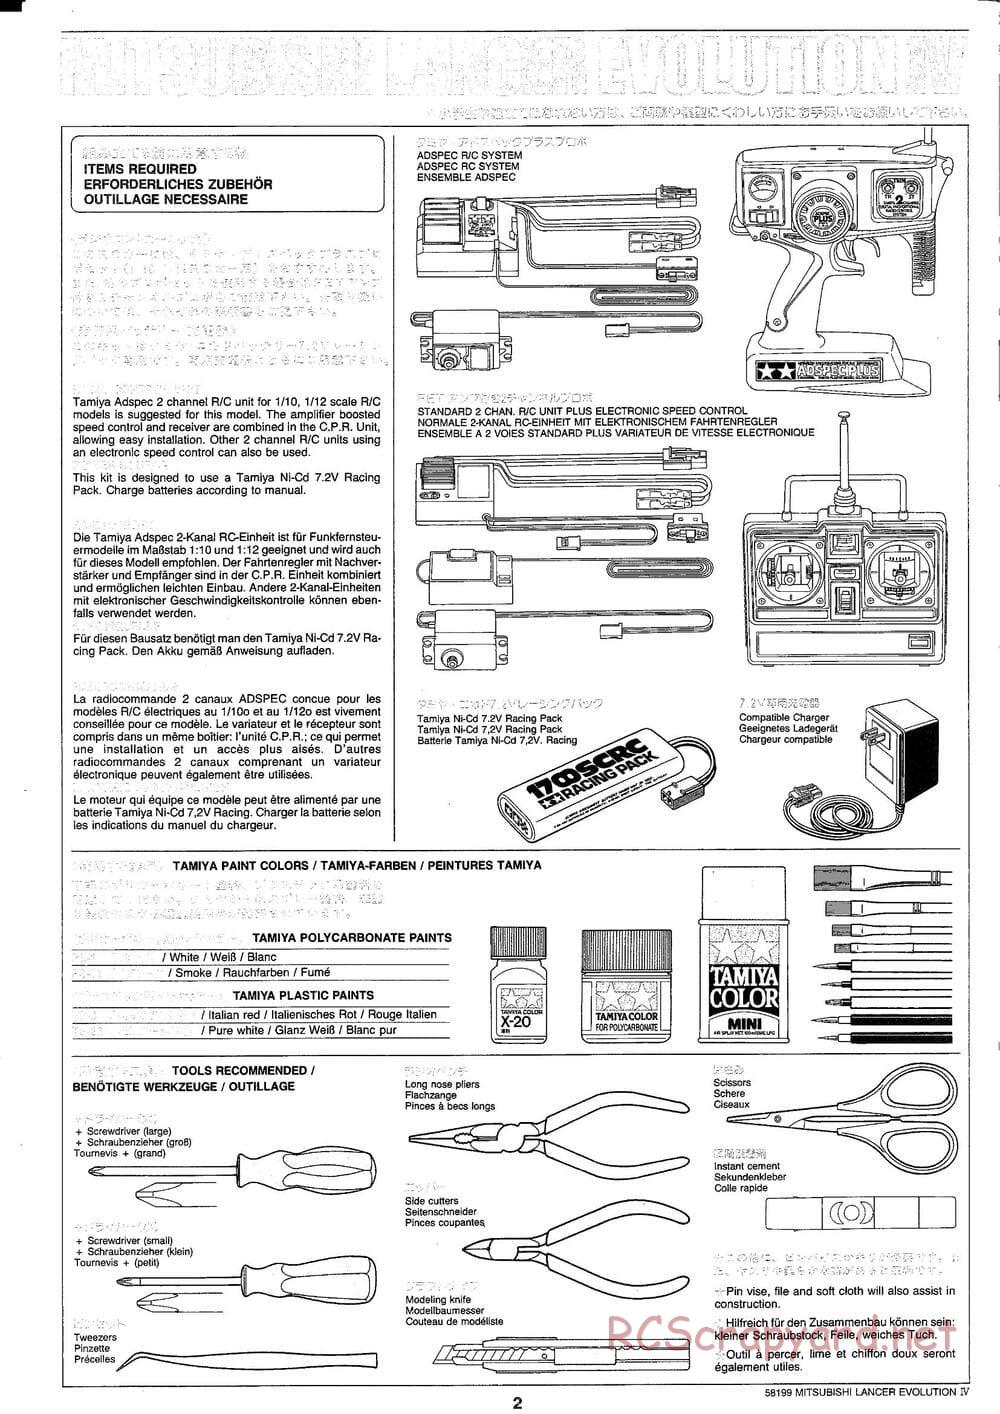 Tamiya - Mitsubishi Lancer Evolution IV - TA-03F Chassis - Manual - Page 2